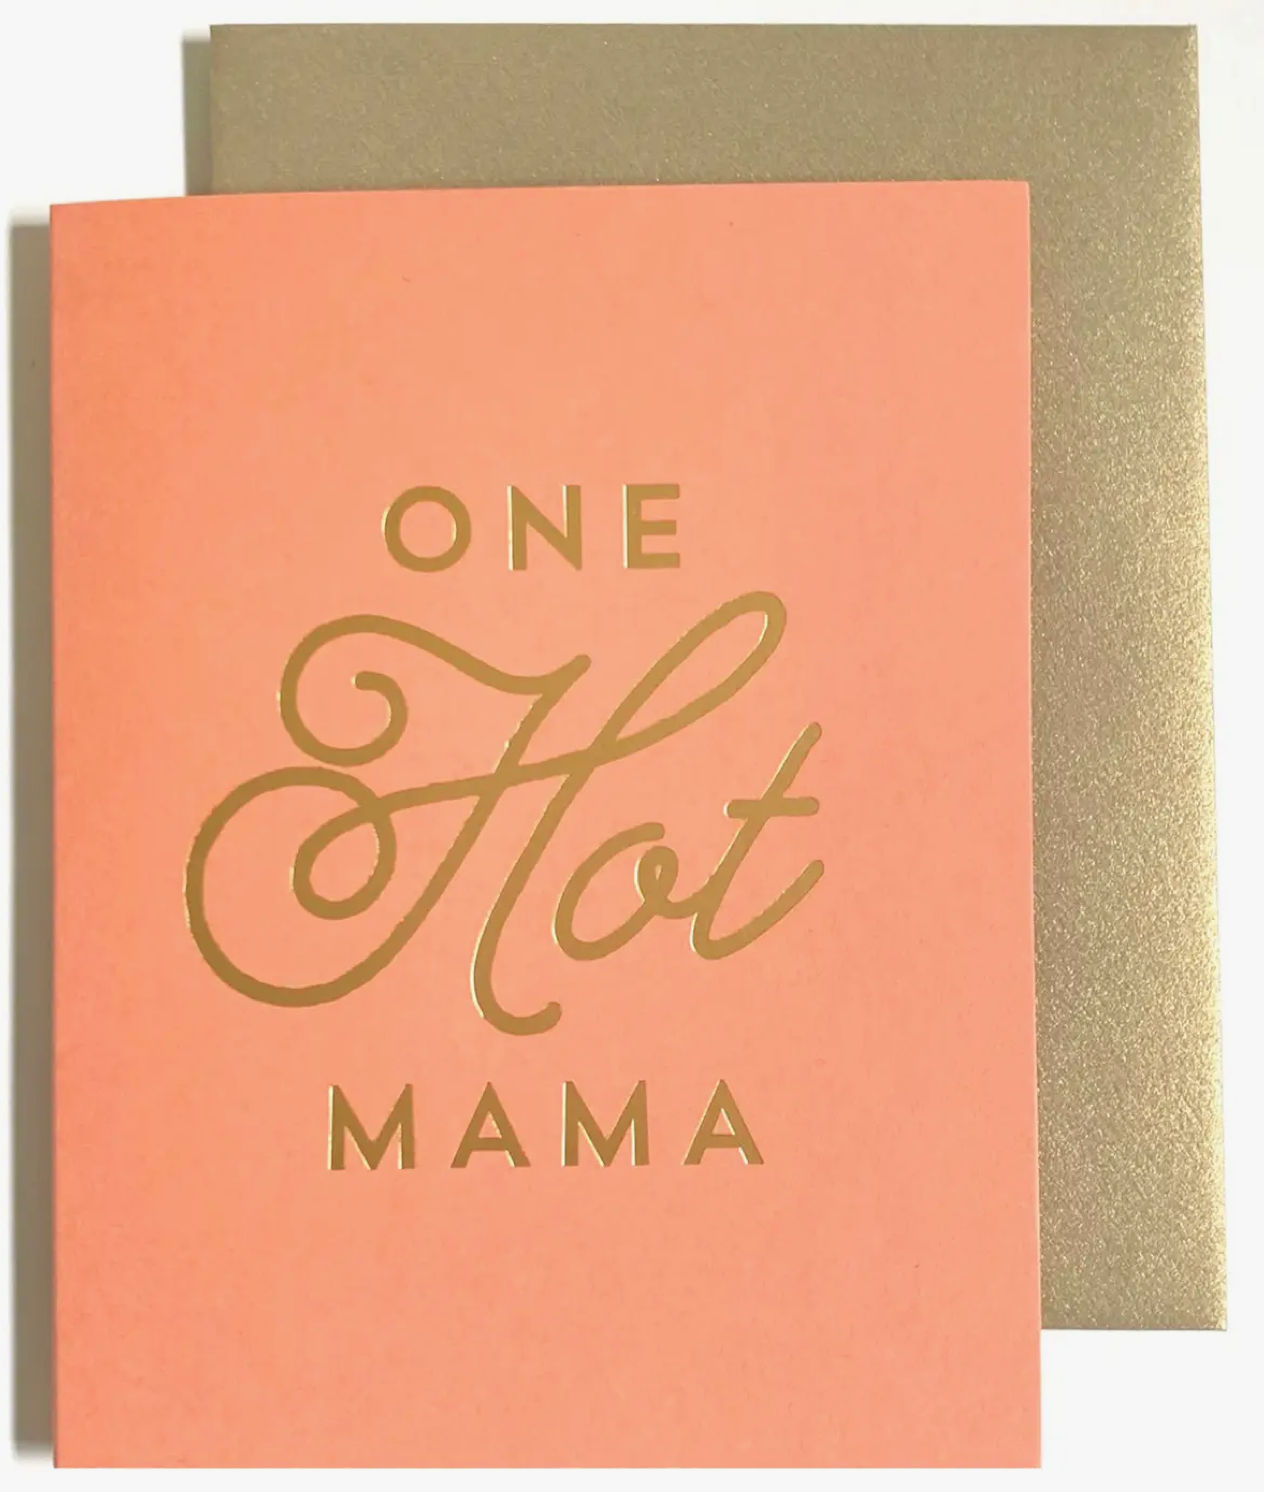 Hot Mama Card